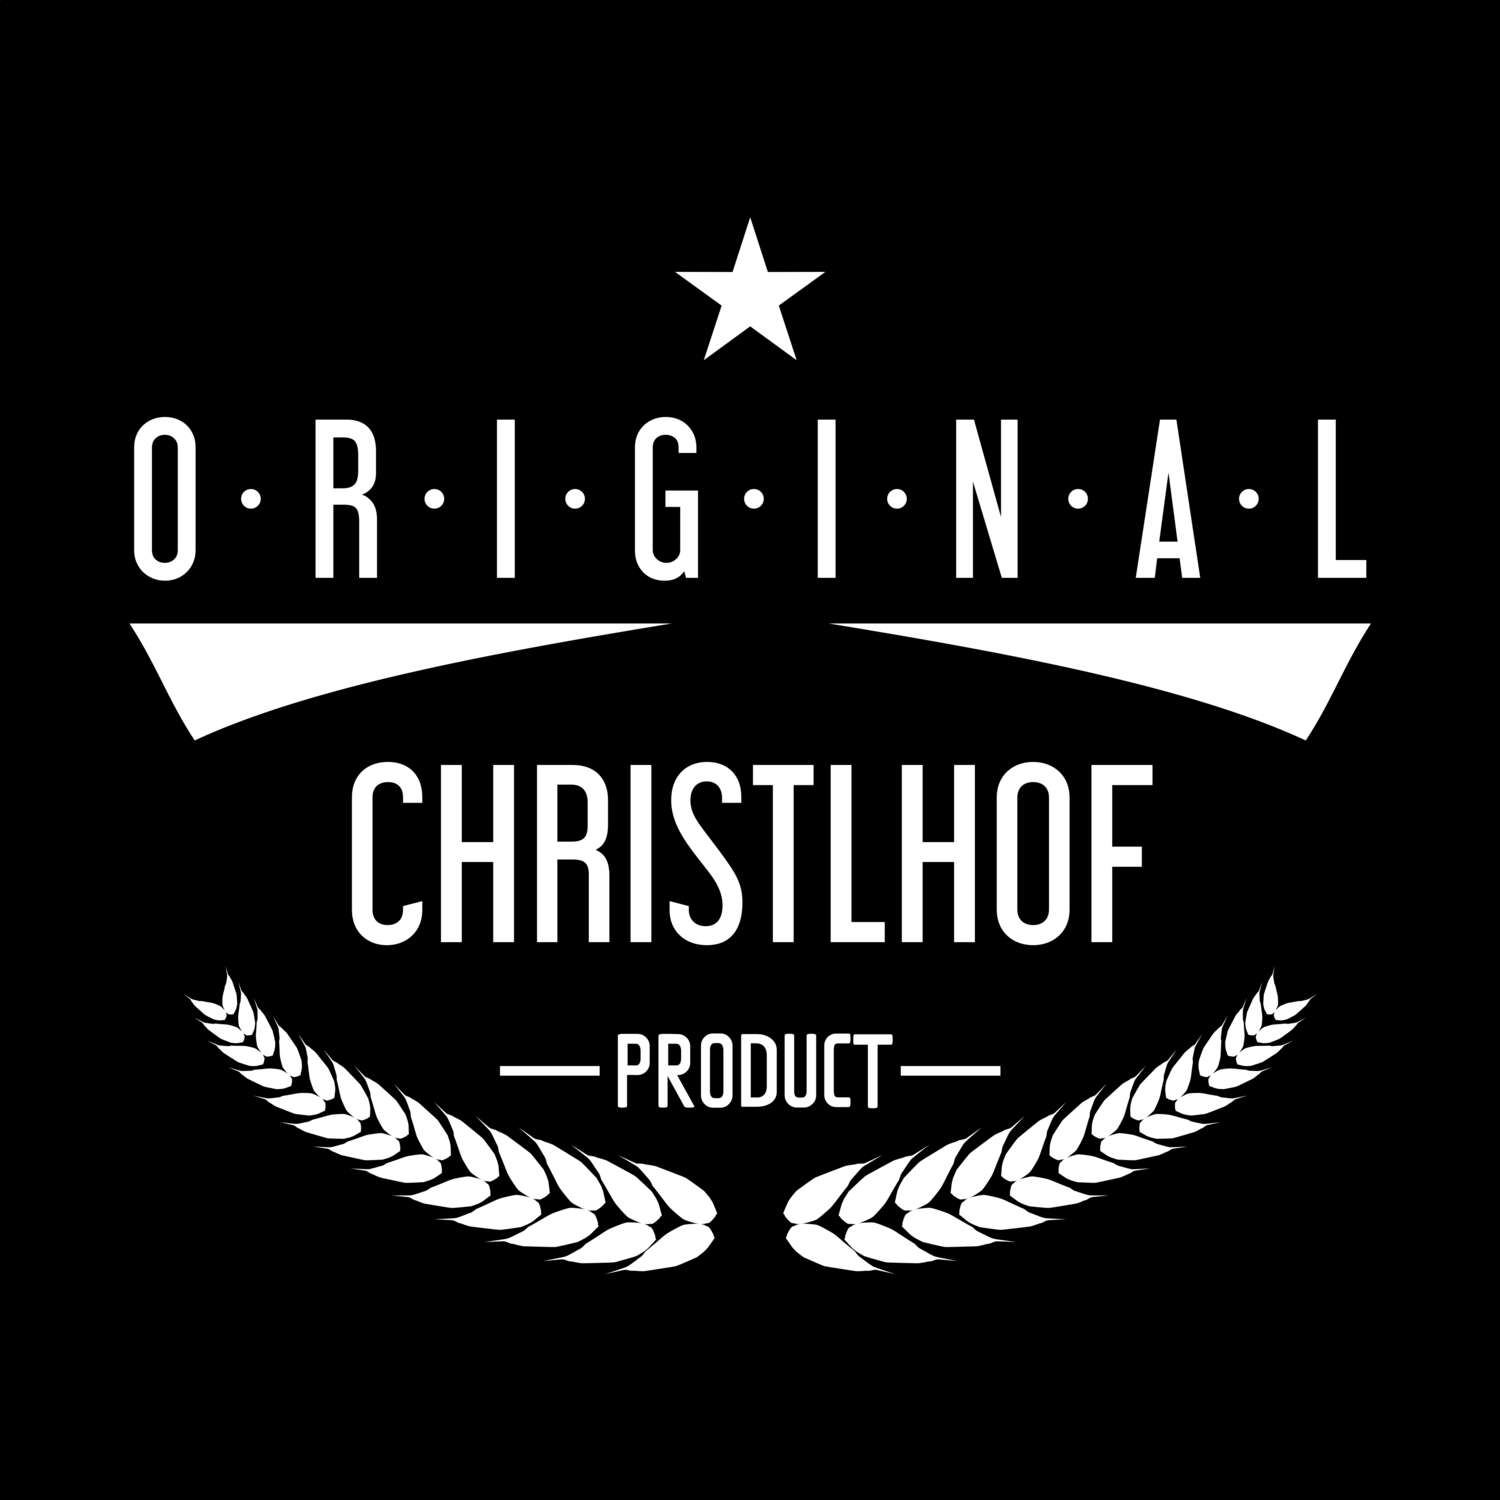 Christlhof T-Shirt »Original Product«